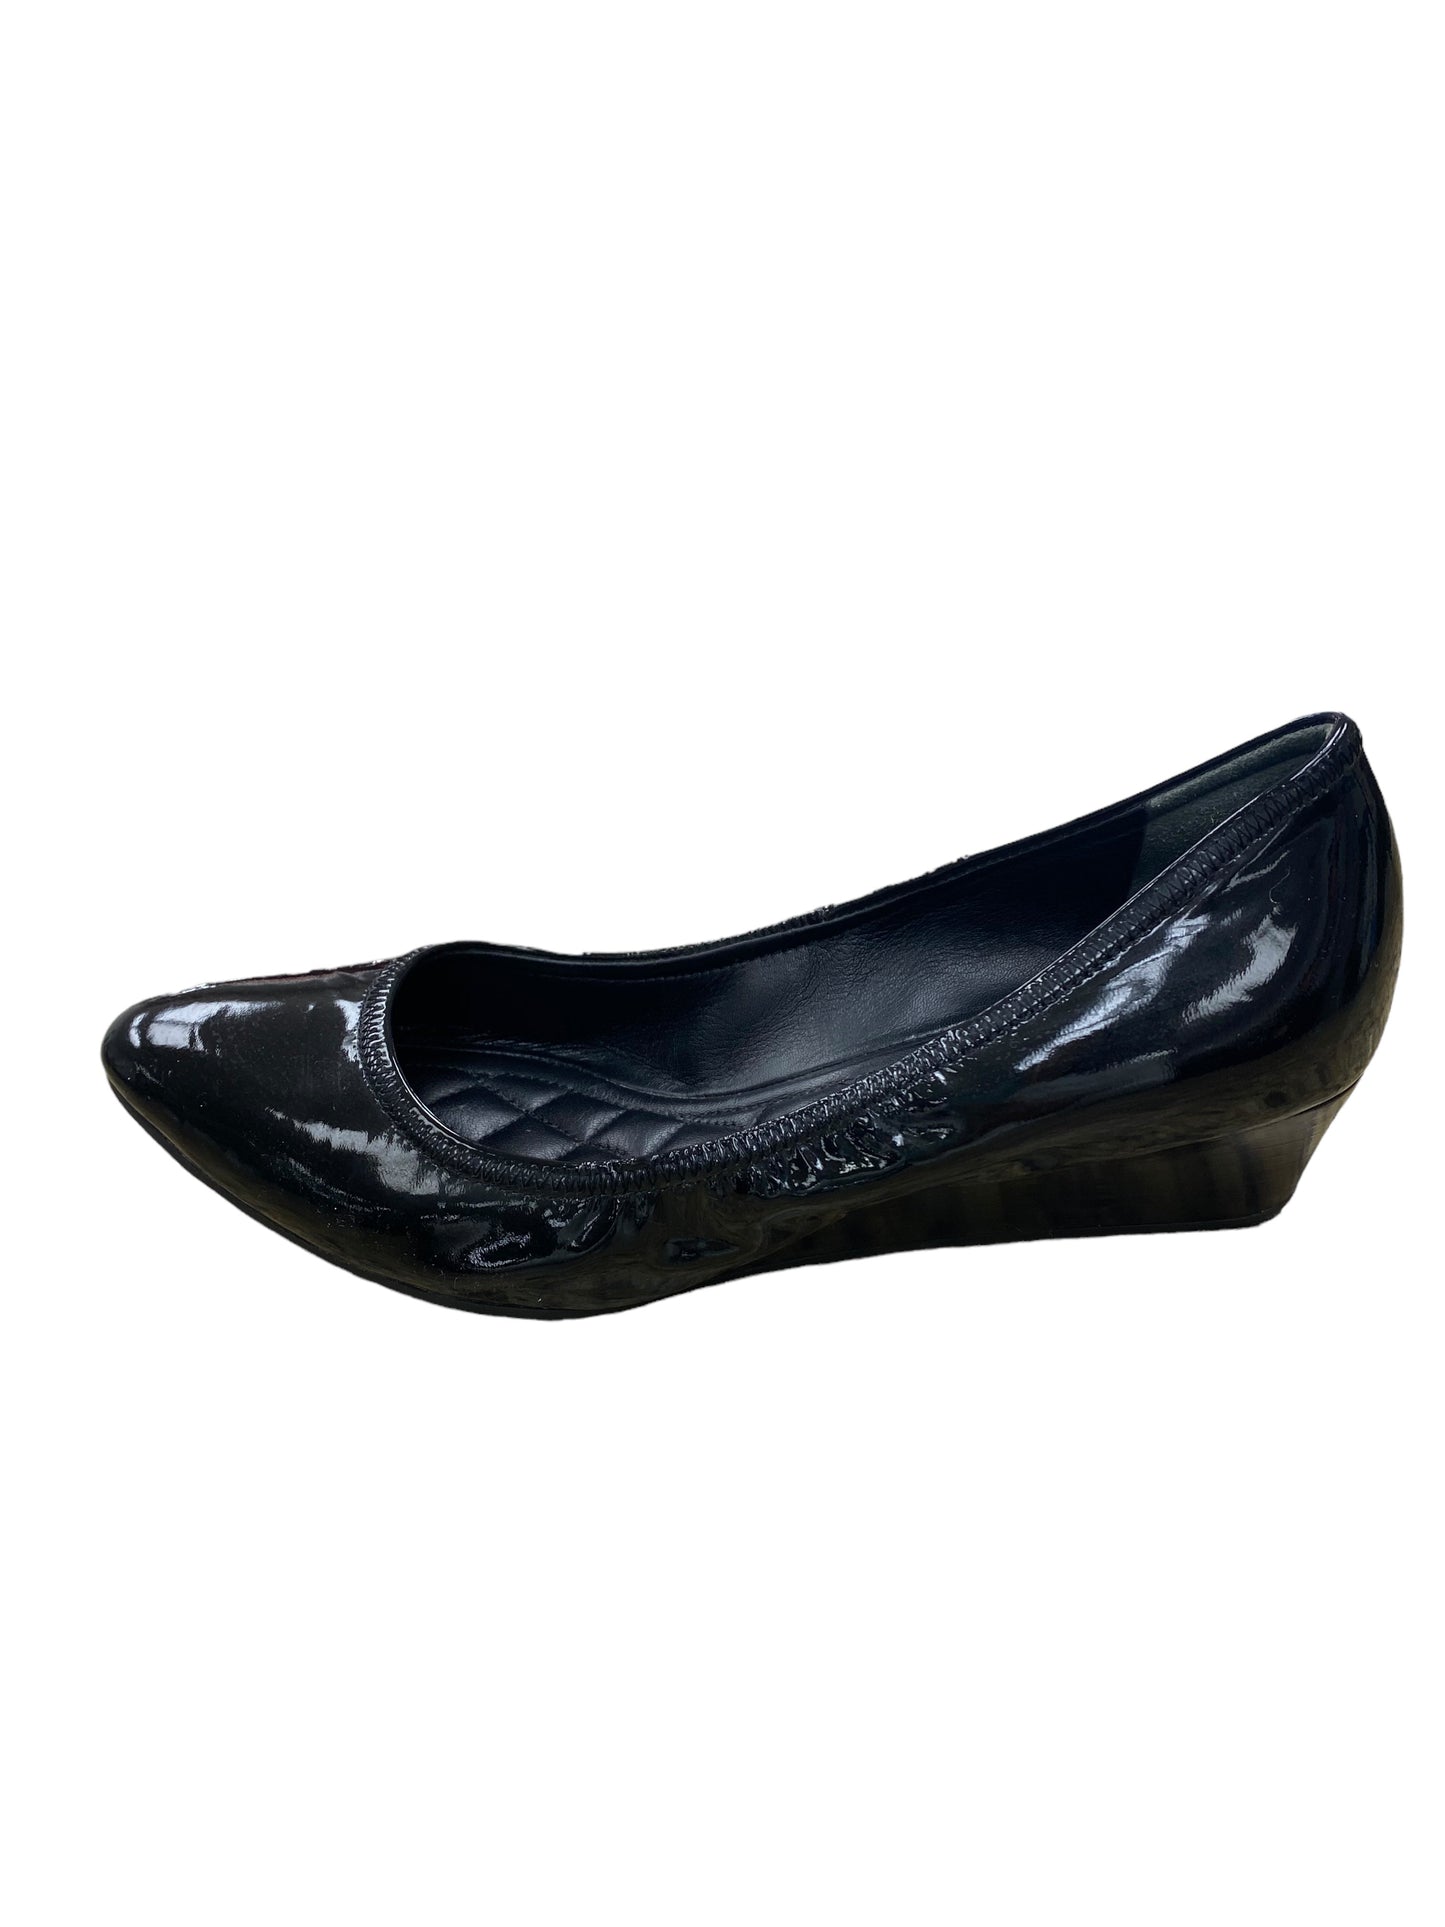 Black Shoes Heels Wedge Cole-haan, Size 7